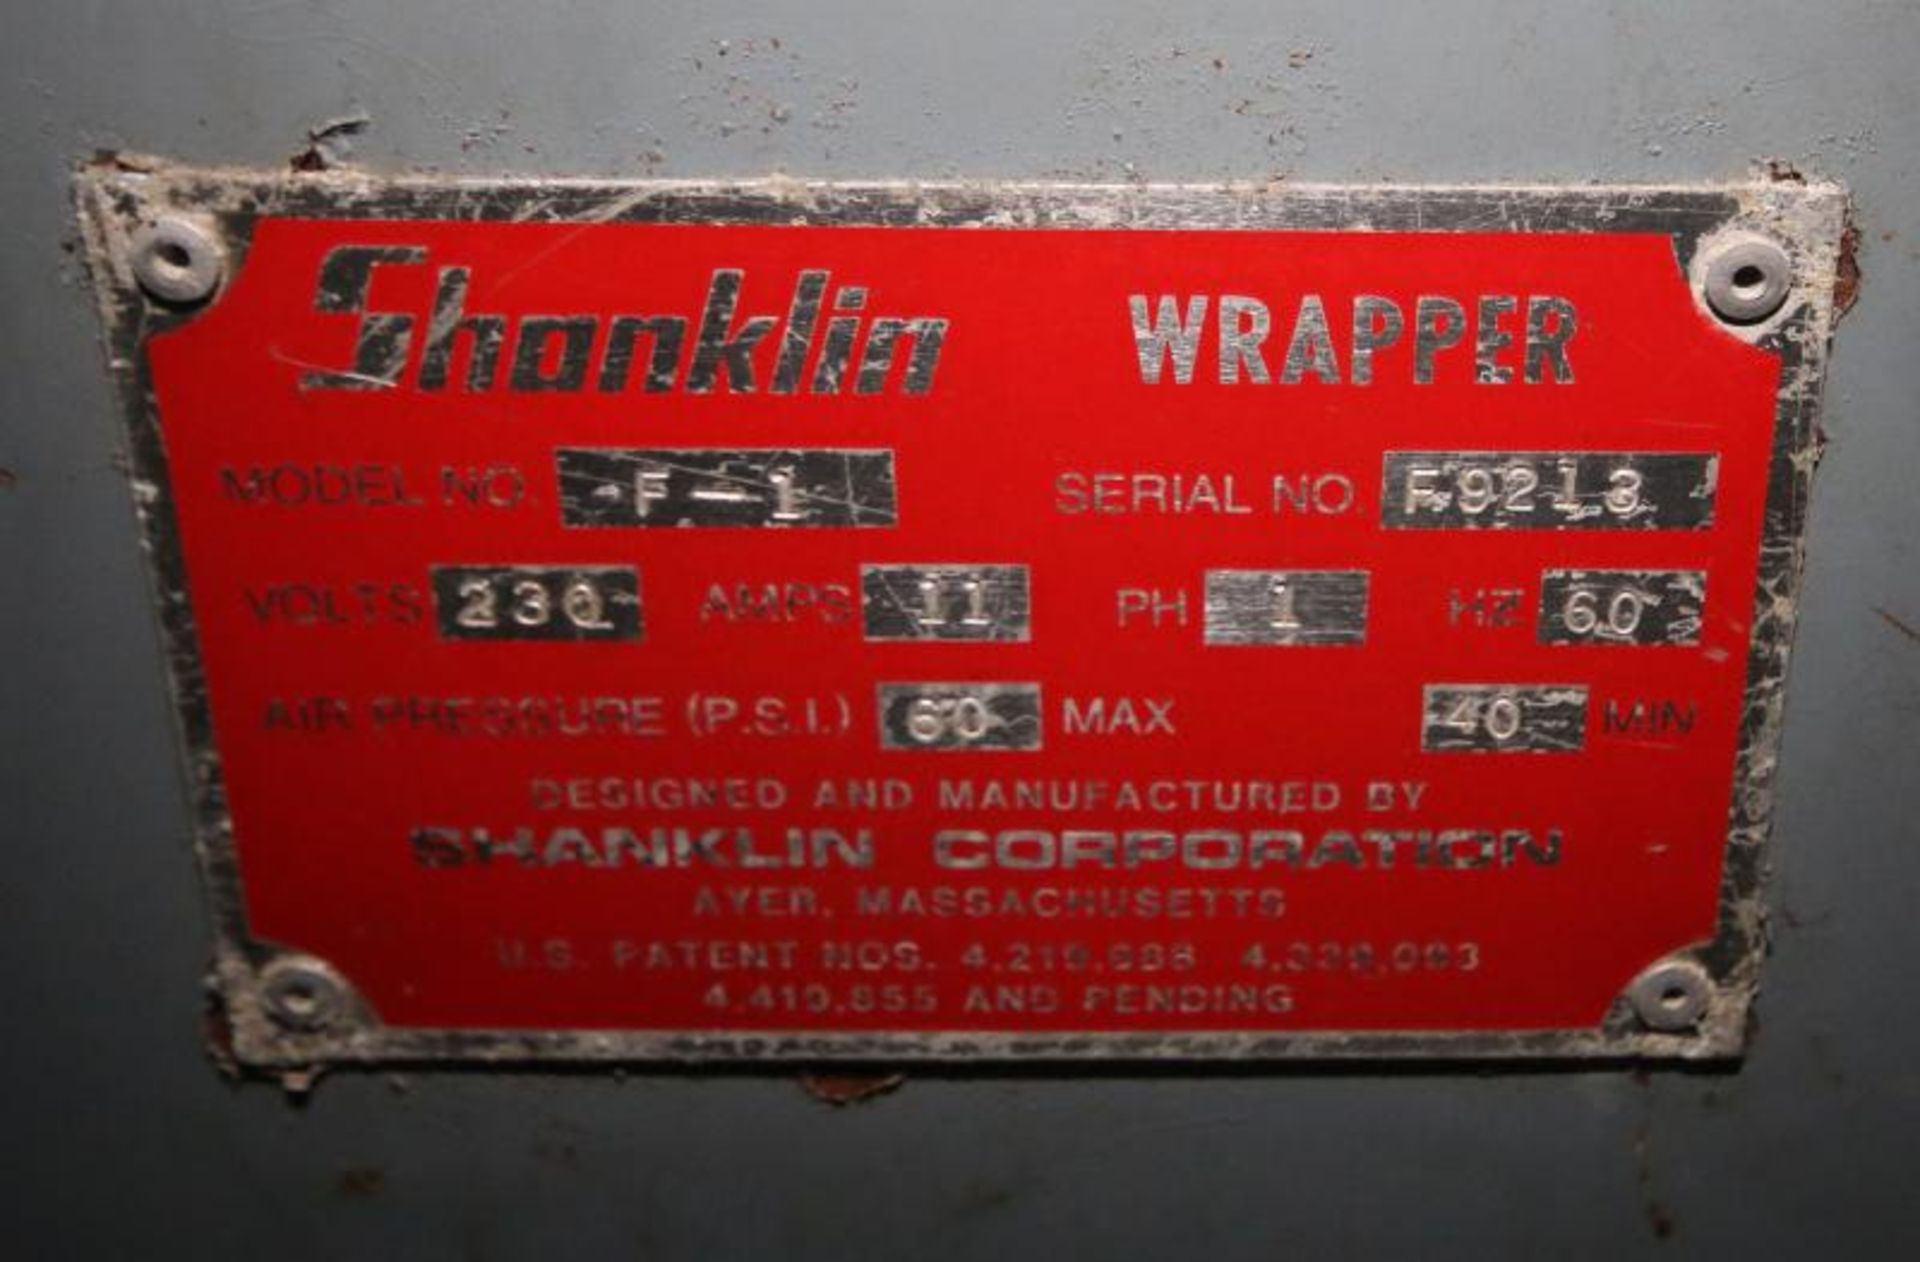 Shanklin FloWrap Side Seal Shrink Wrapper, Model F-1, SN F9213, with Allen Bradley Micrologix 1000 - Image 7 of 7